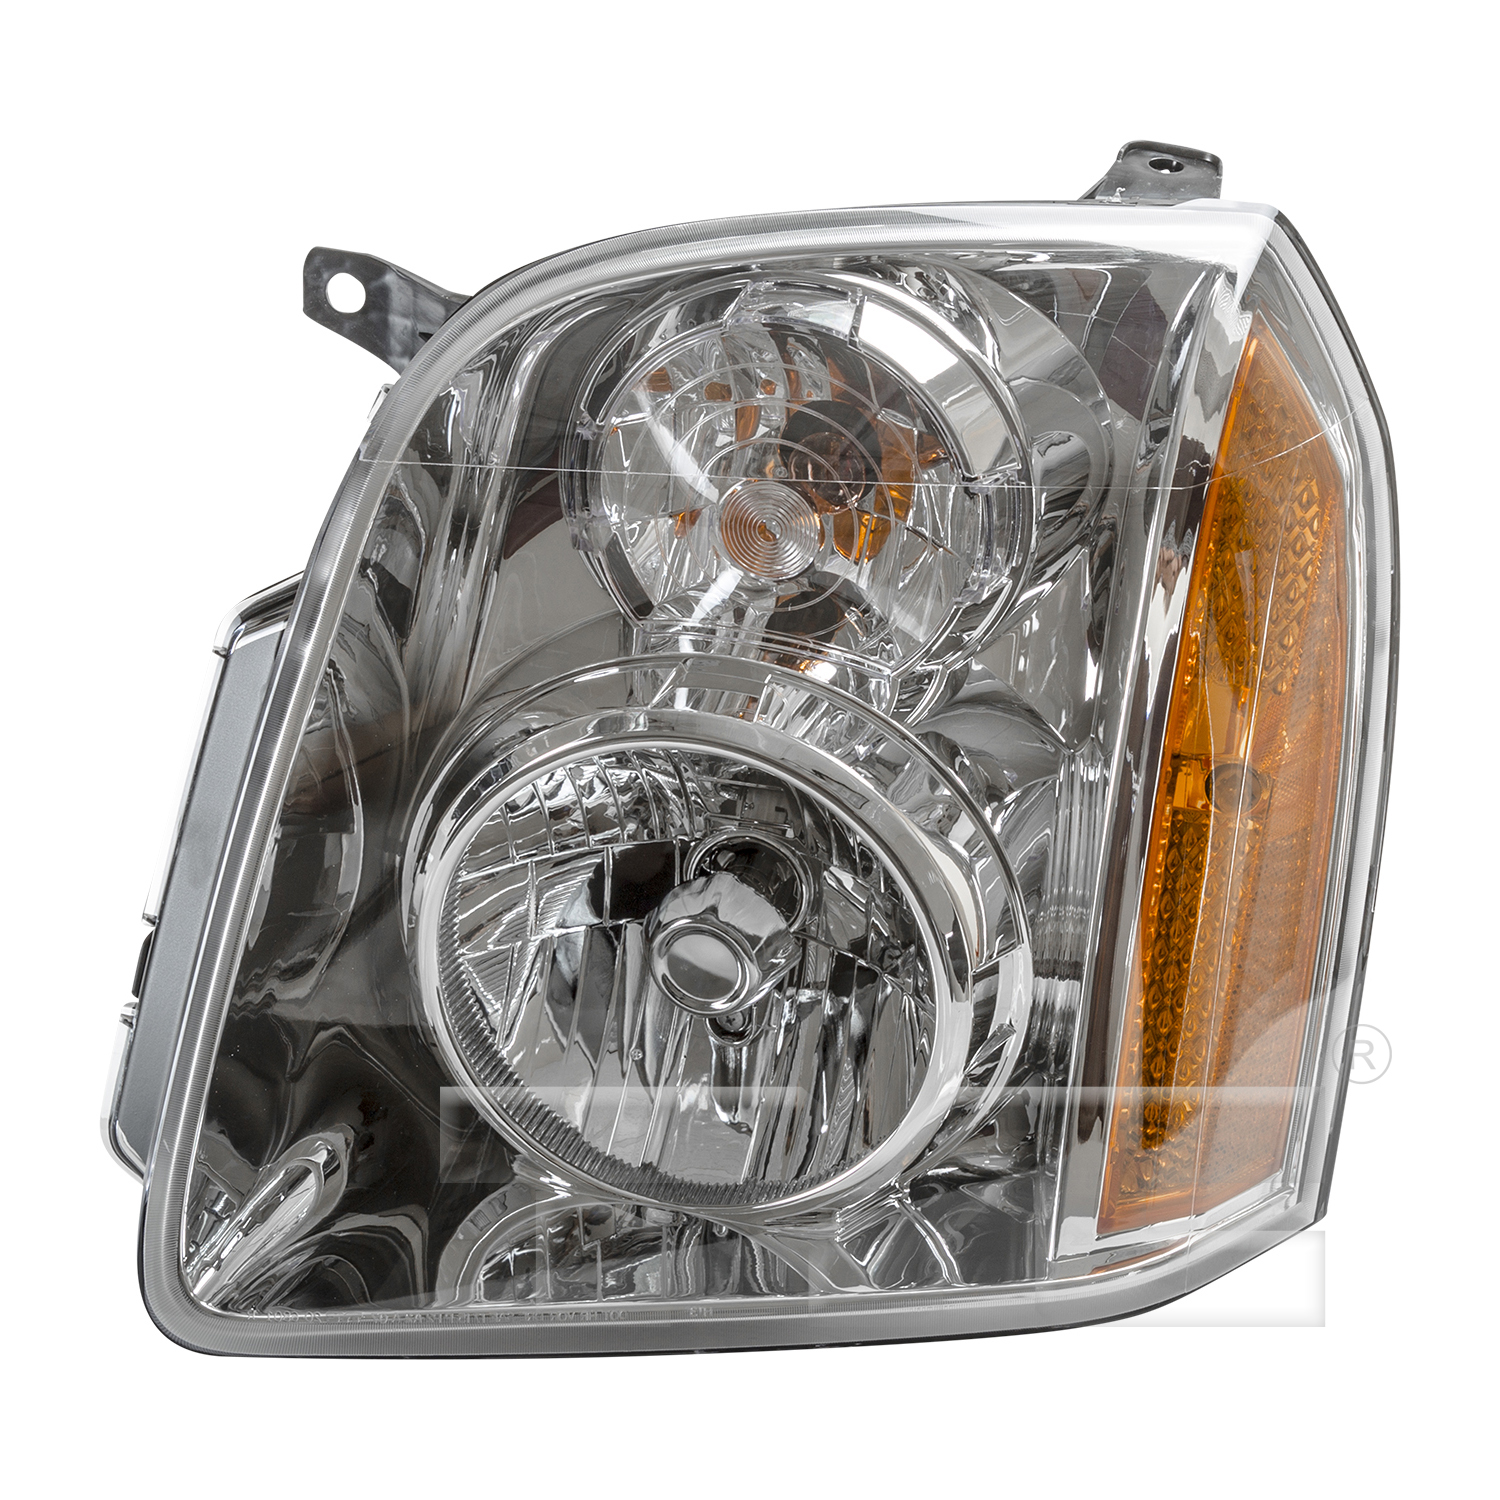 Aftermarket HEADLIGHTS for GMC - YUKON XL 1500, YUKON XL 1500,07-14,LT Headlamp assy composite